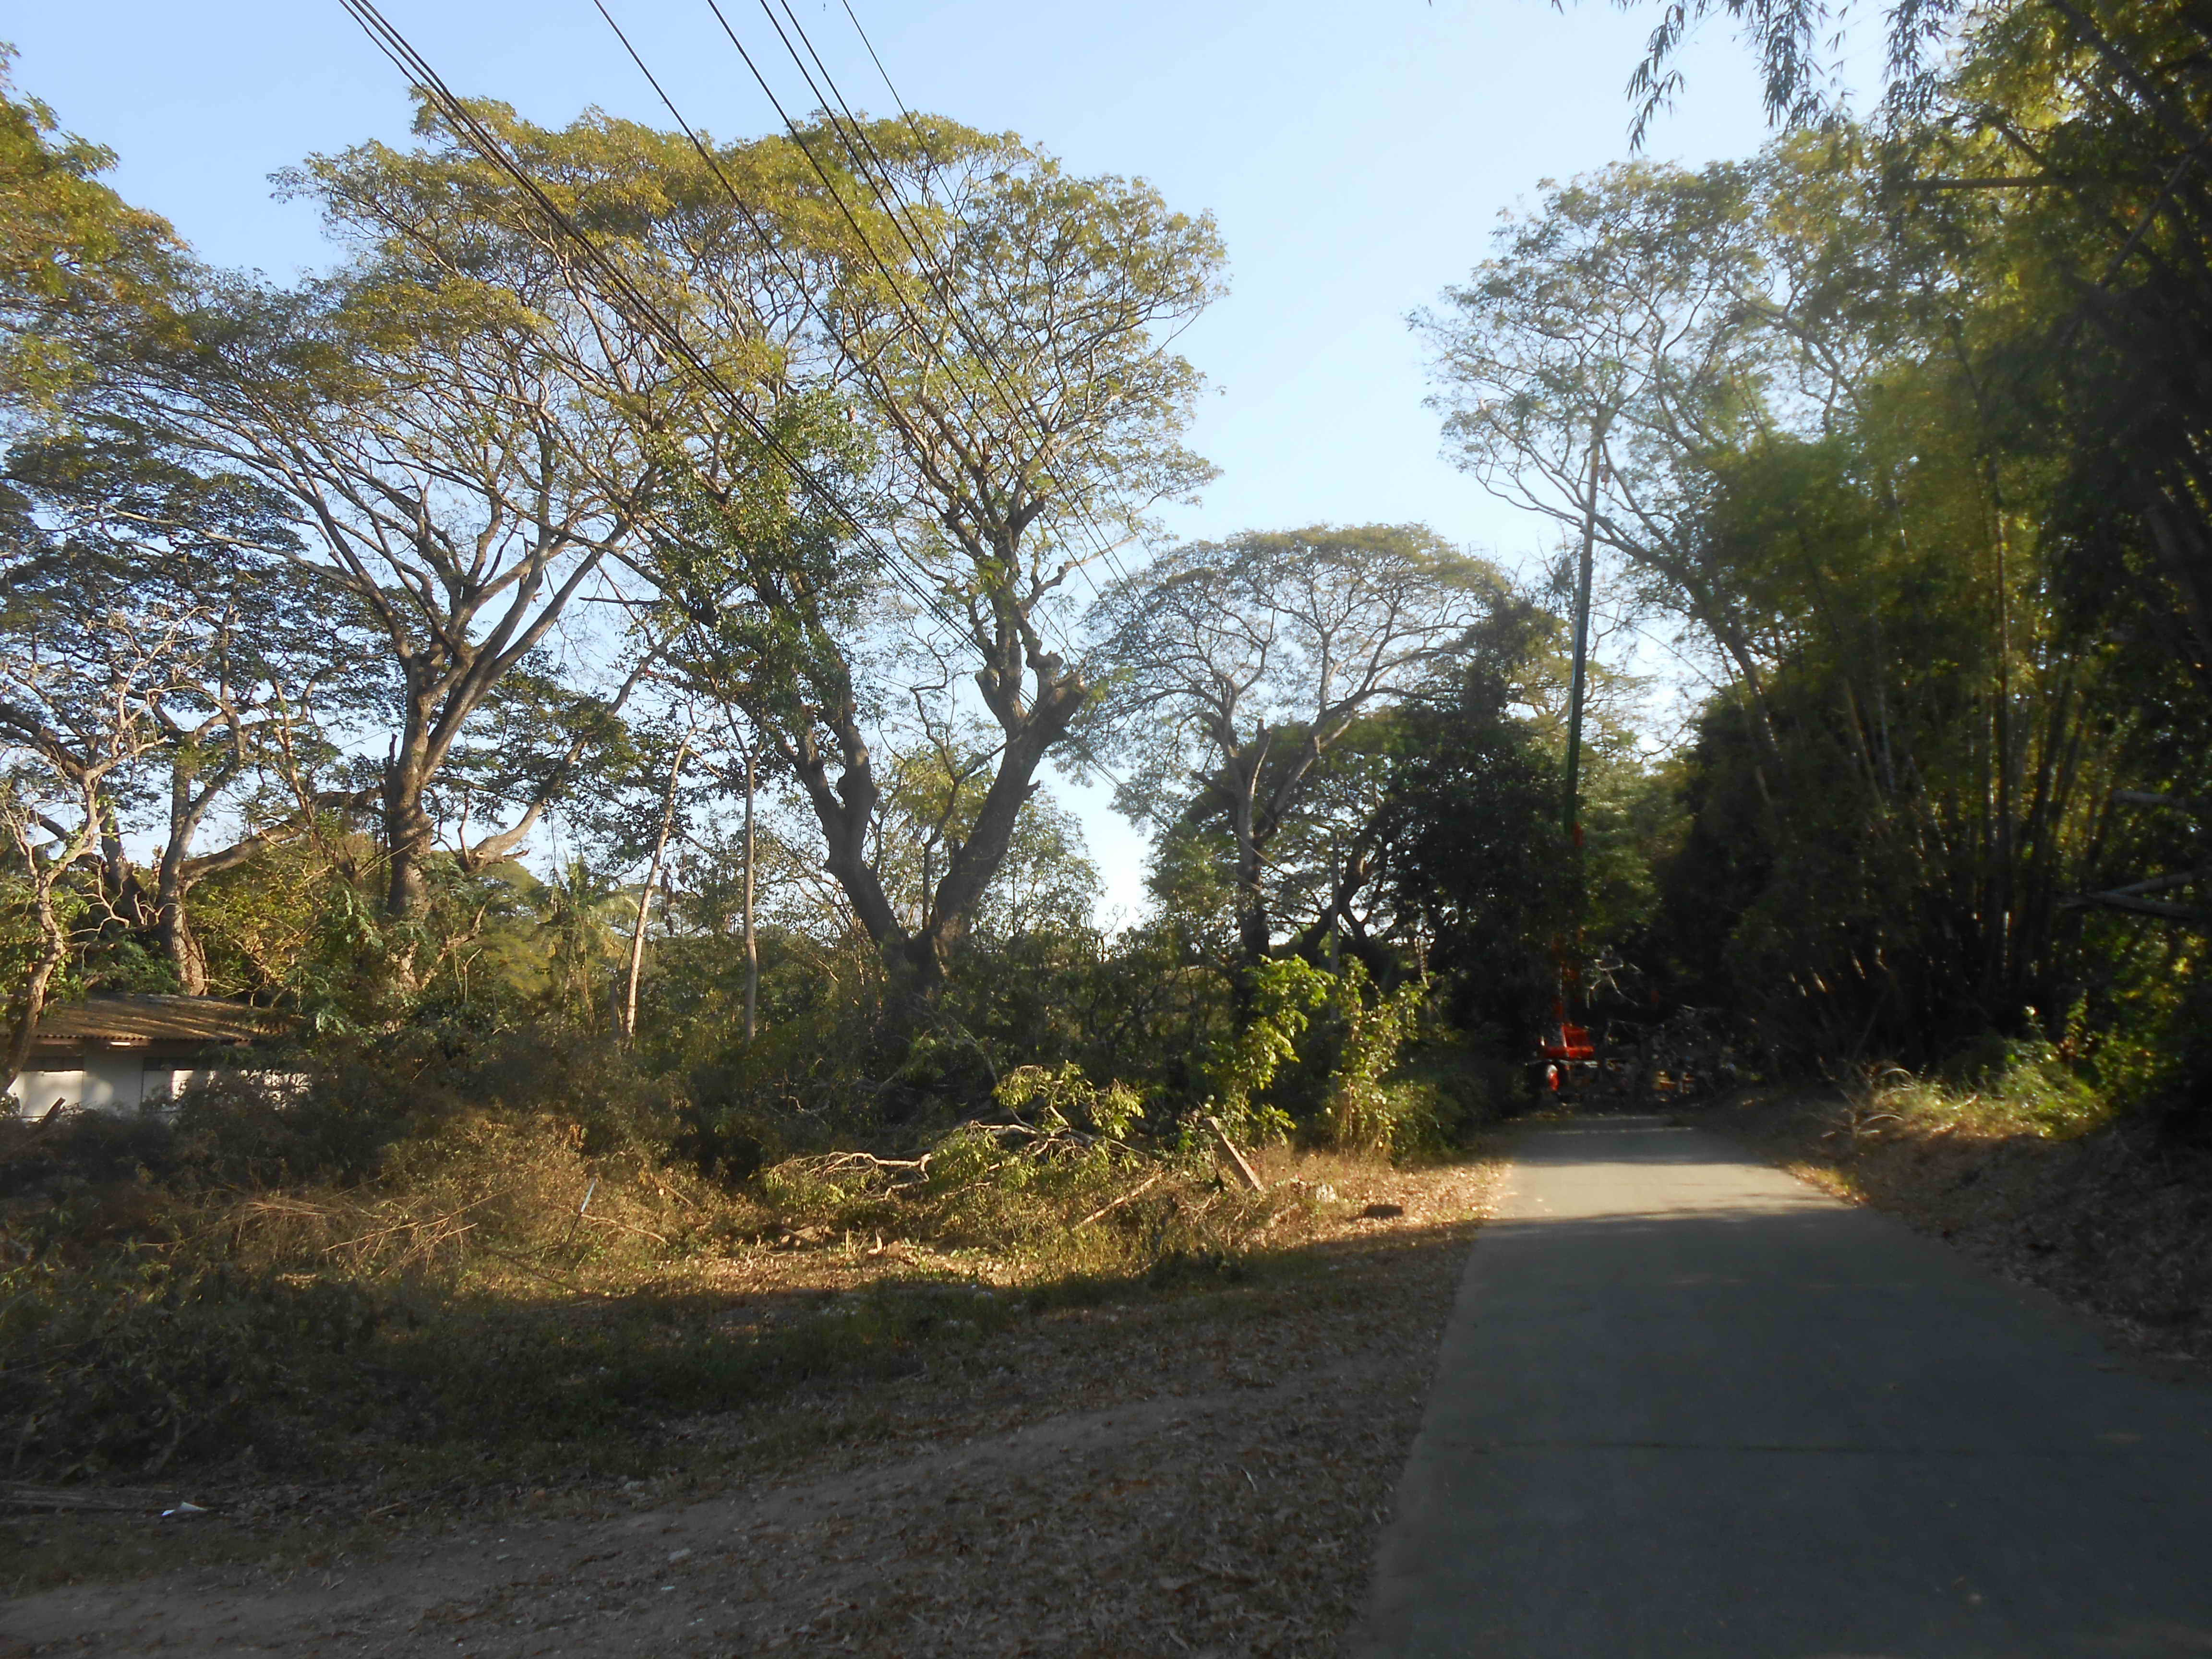 Chiang Mai Heritage Trees Axed